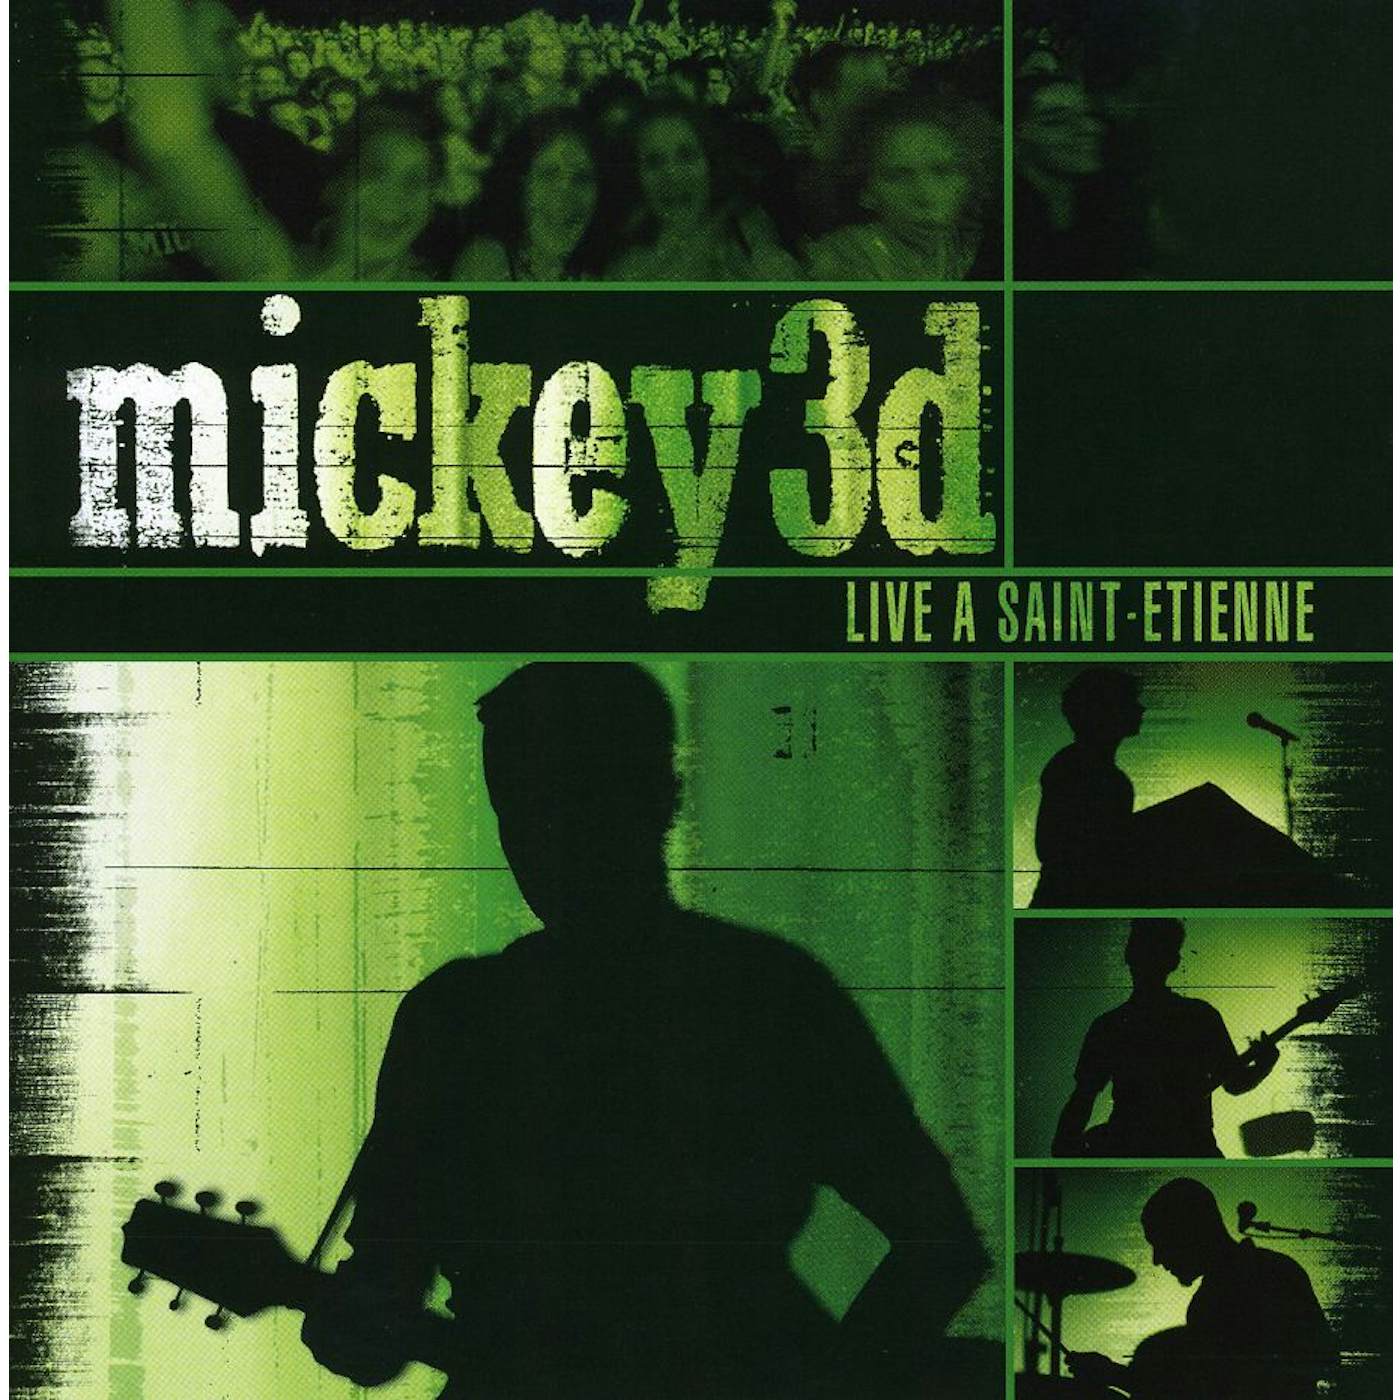 Mickey 3d LIVE SAINT-ETIENNE CD